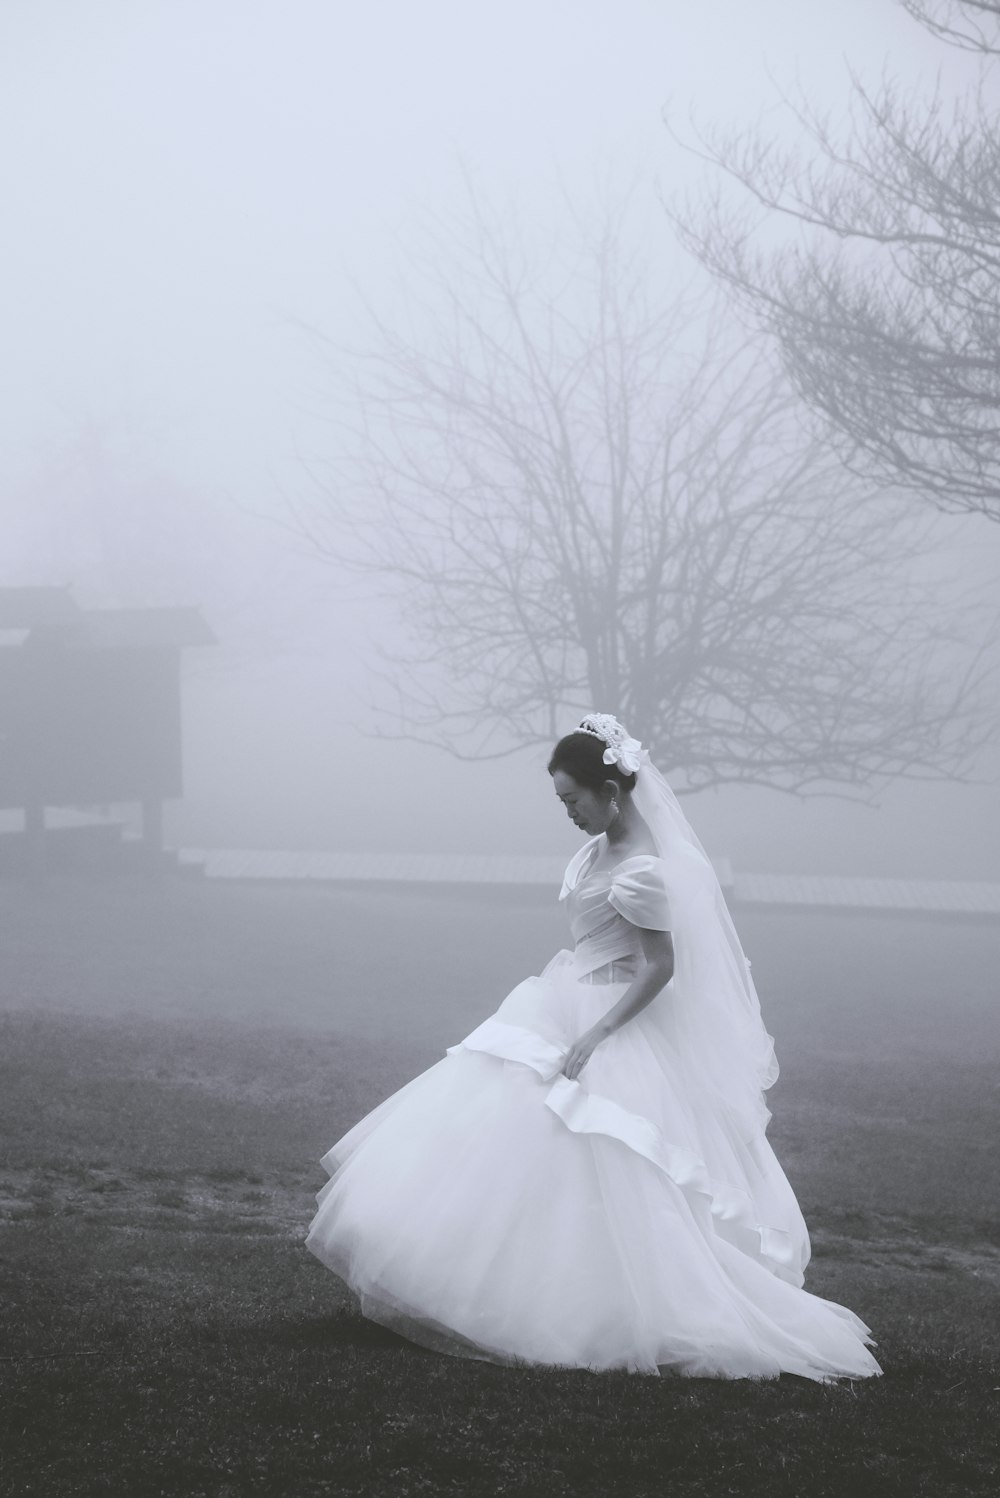 a woman in a wedding dress standing in a field